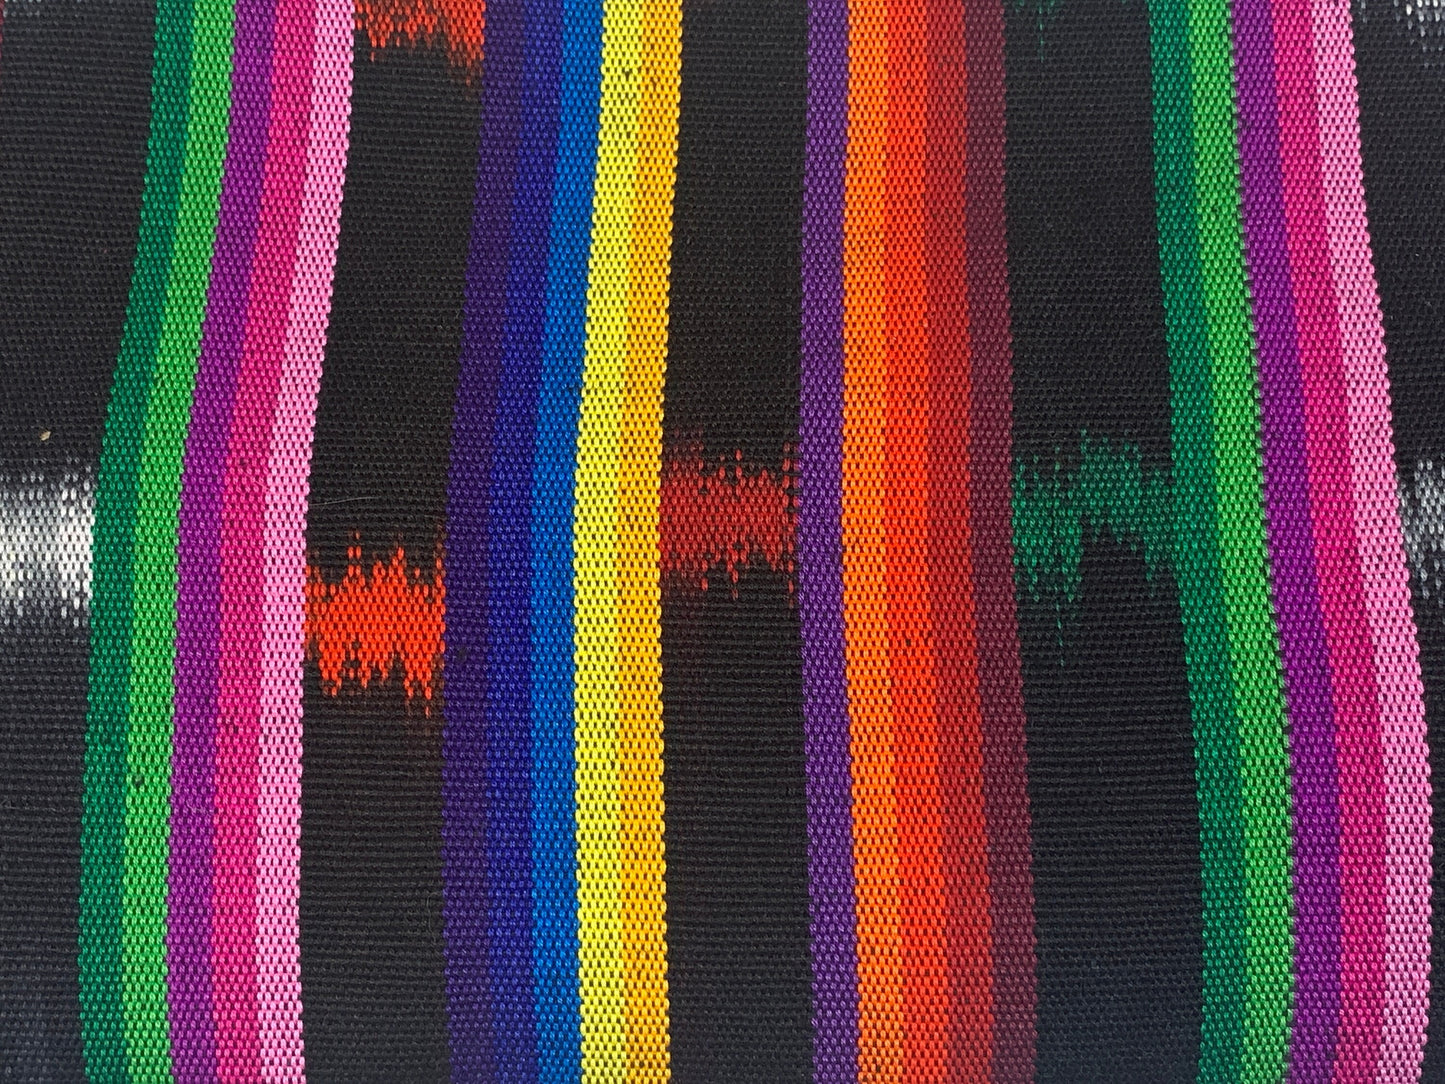 Guatemalan Handwoven Black and Rainbow Ikat Striped